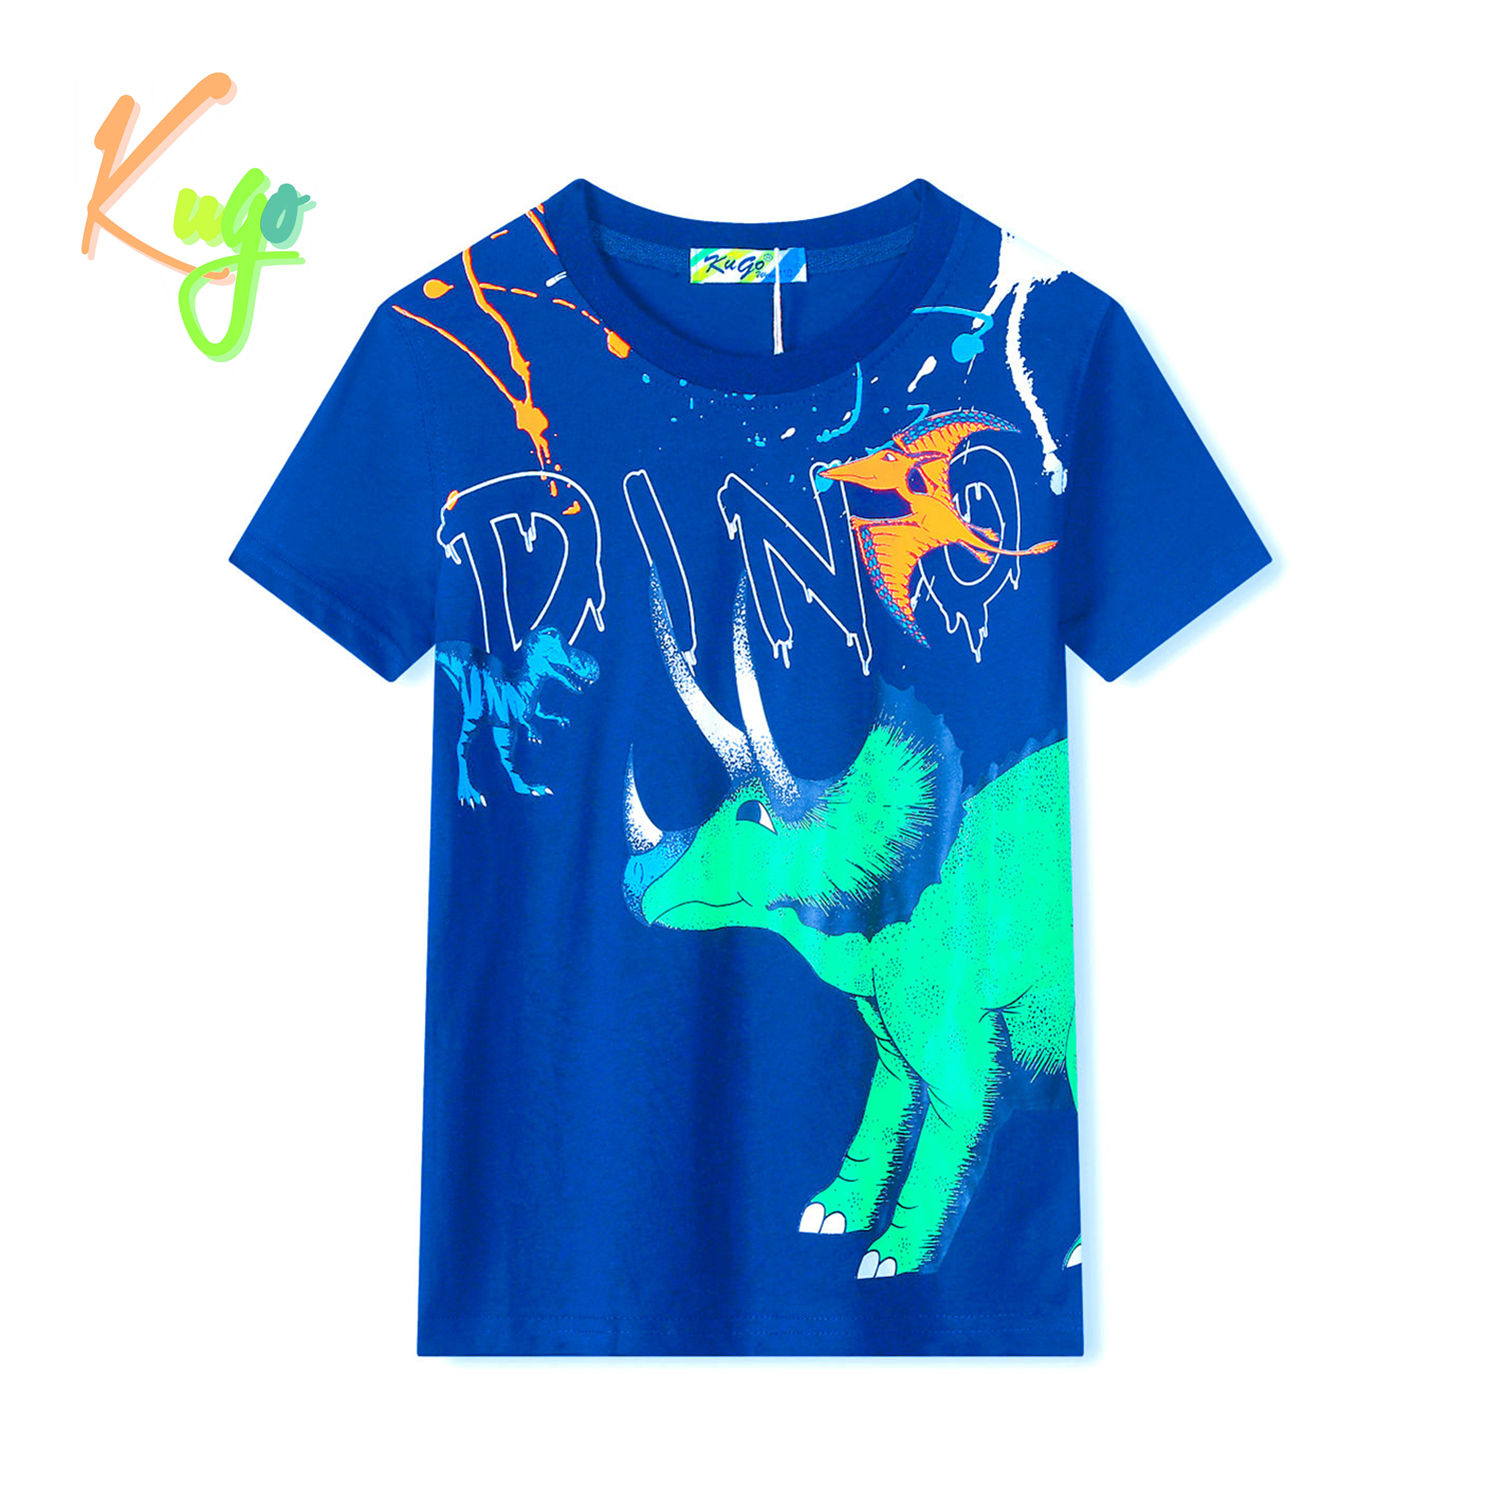 Chlapecké tričko - KUGO TM8571C, modrá Barva: Modrá, Velikost: 98